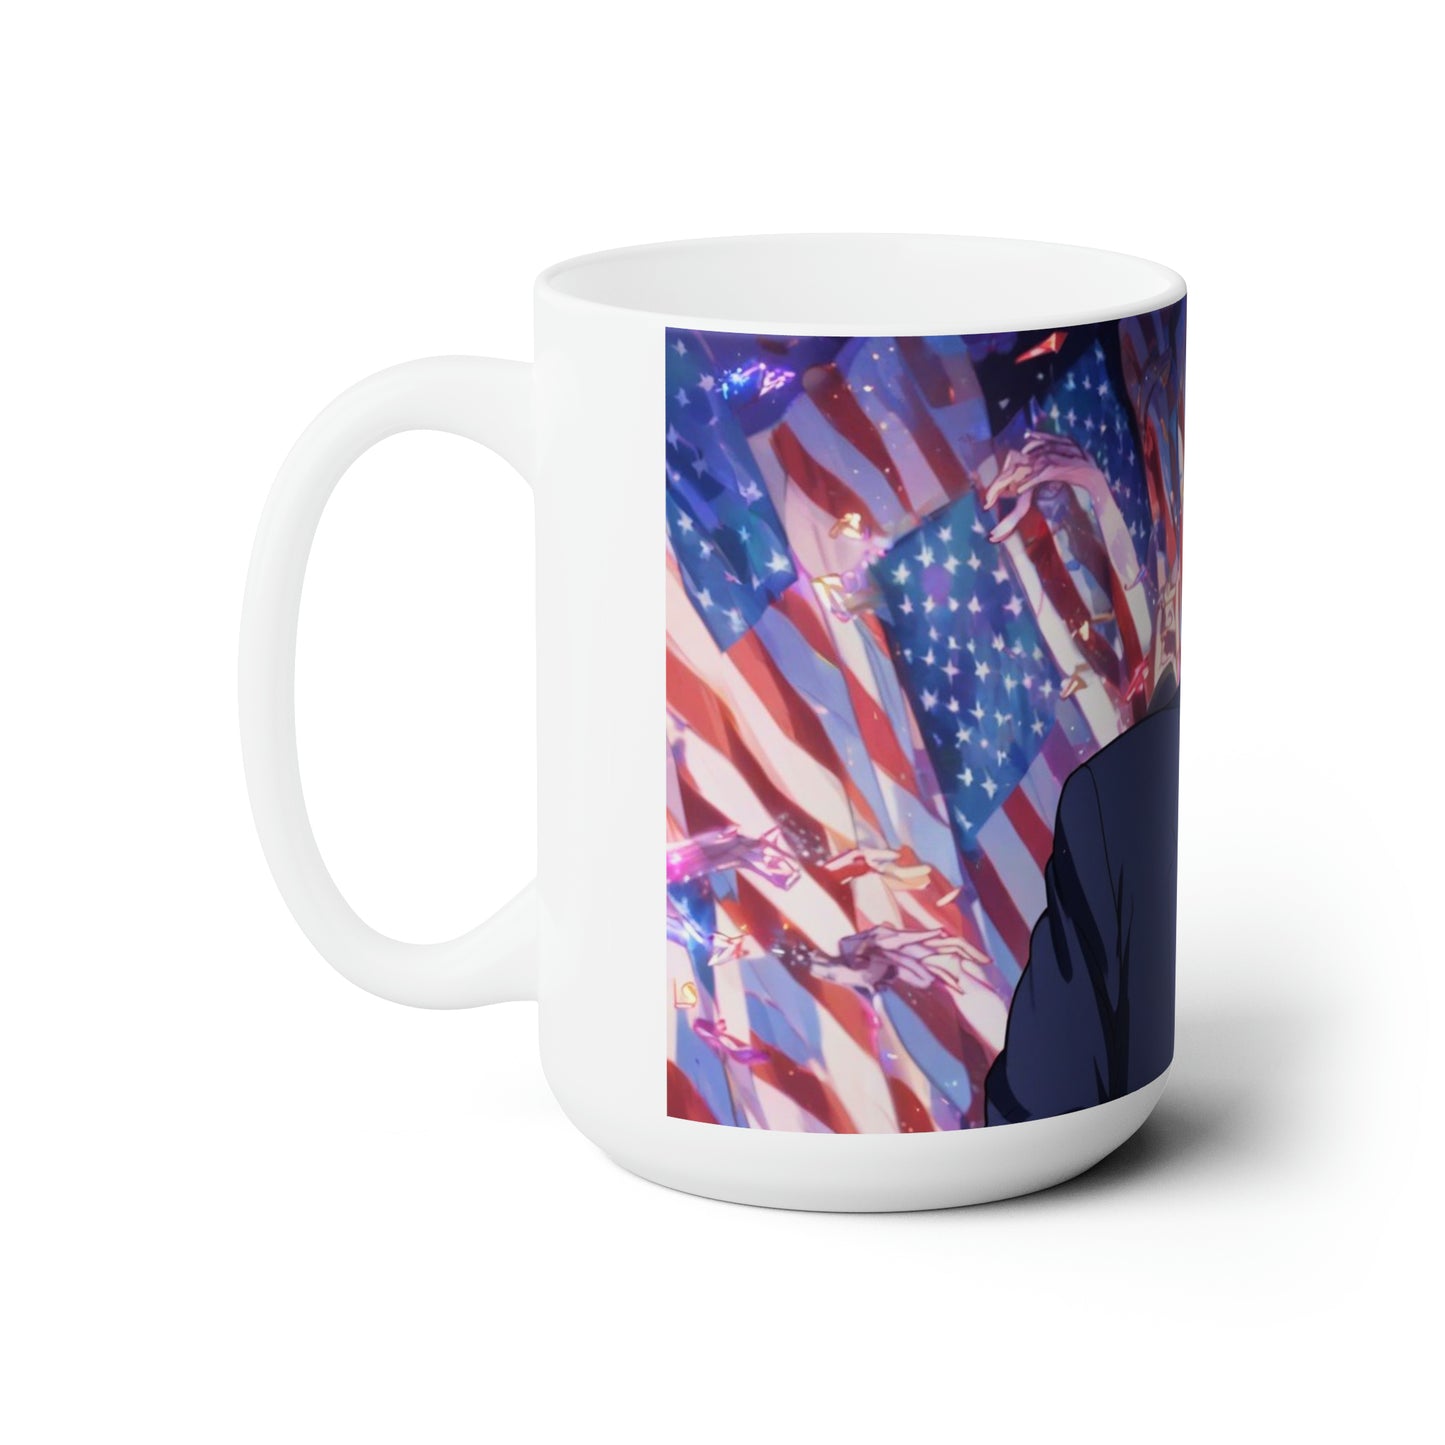 Cartoon style 1 Donald Trump Ceramic Jumbo Coffee Mug 15oz